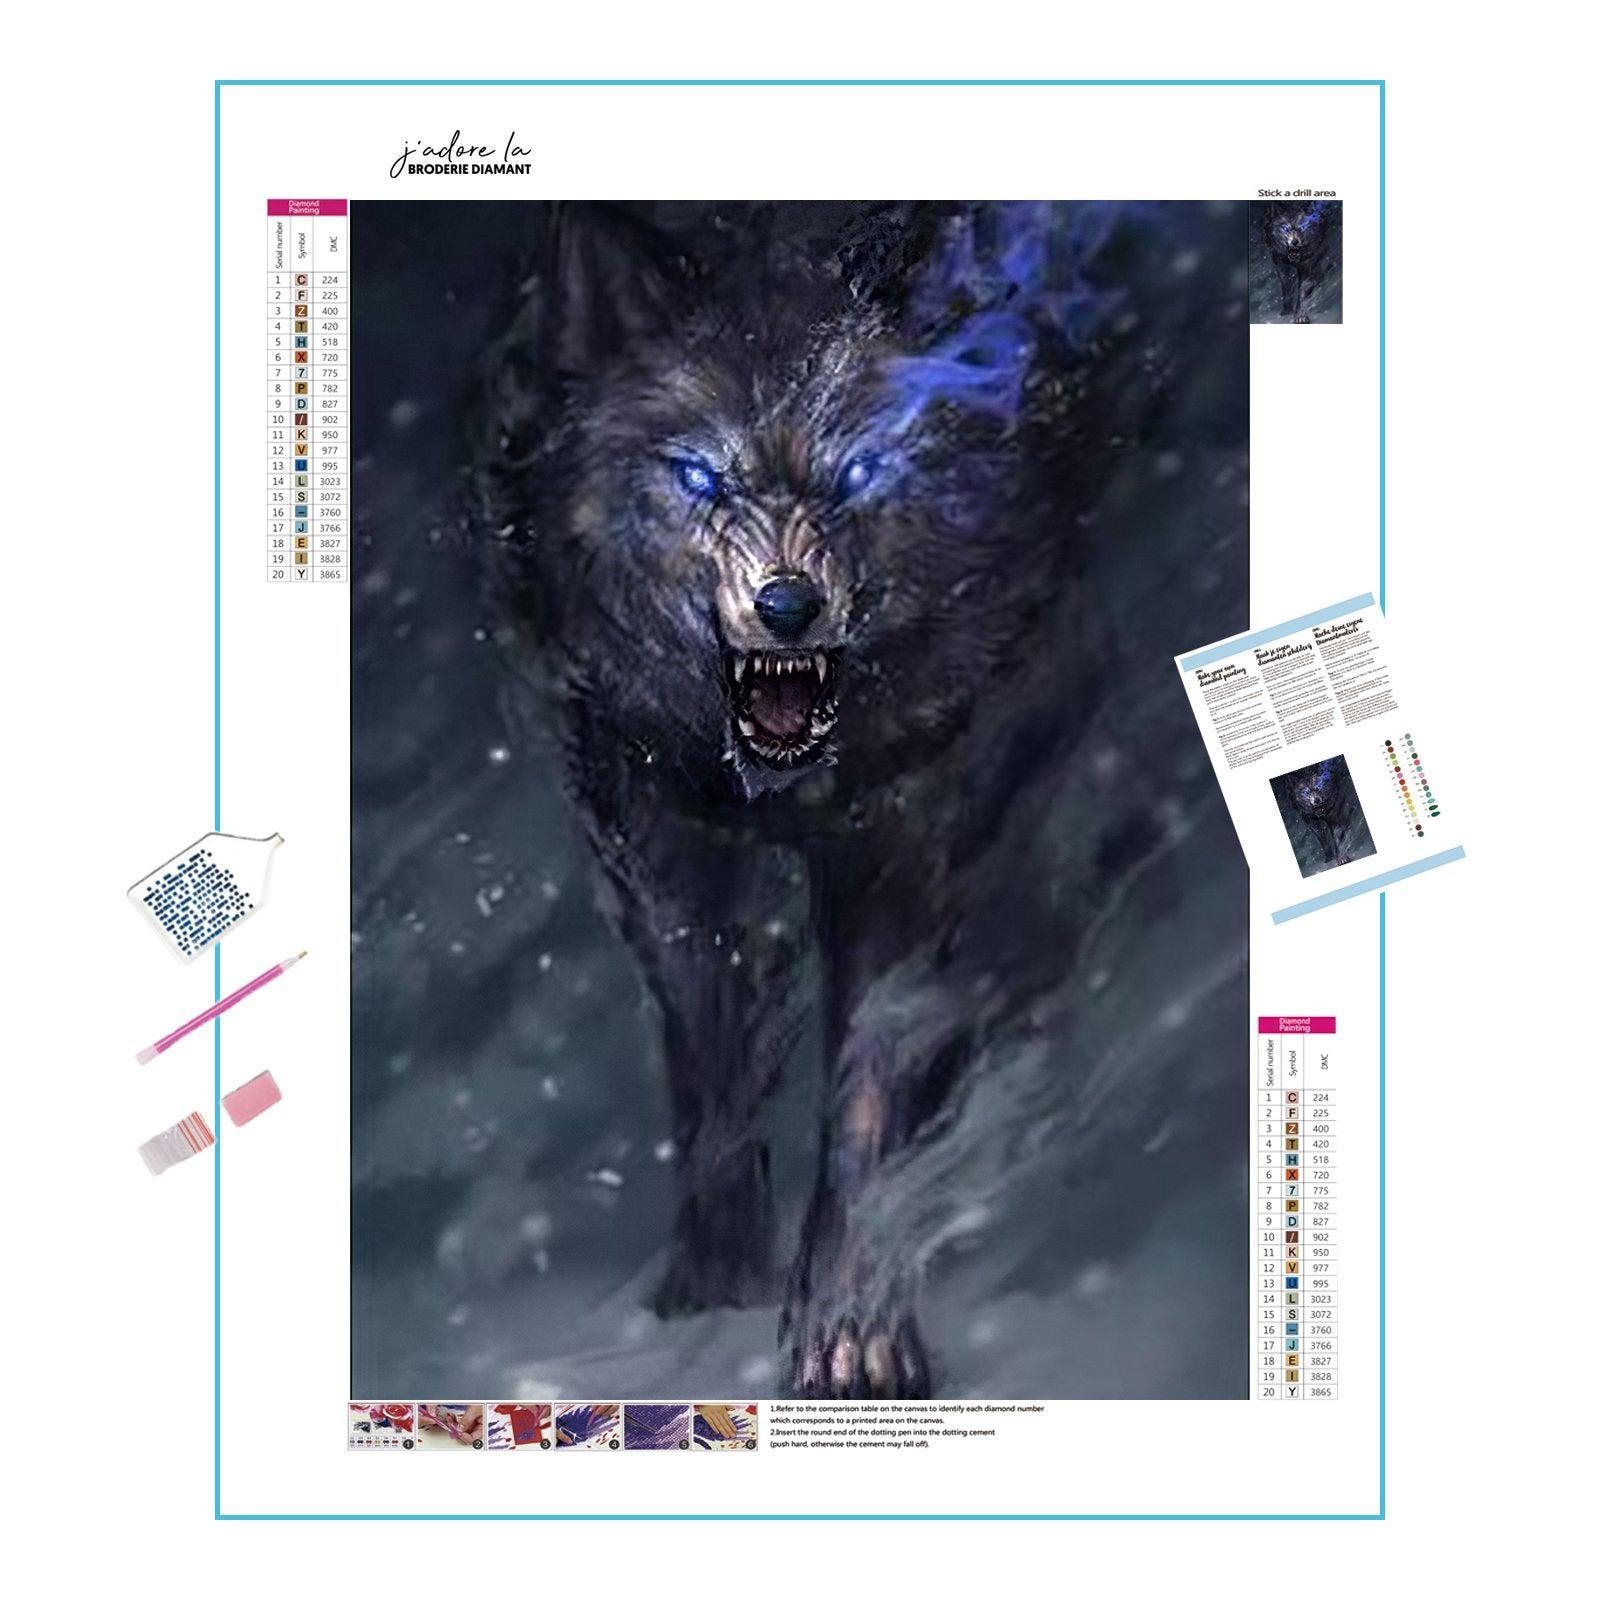 Angry Wolf: Fierce gaze capturing the wild spirit Angry Wolf - Diamondartlove